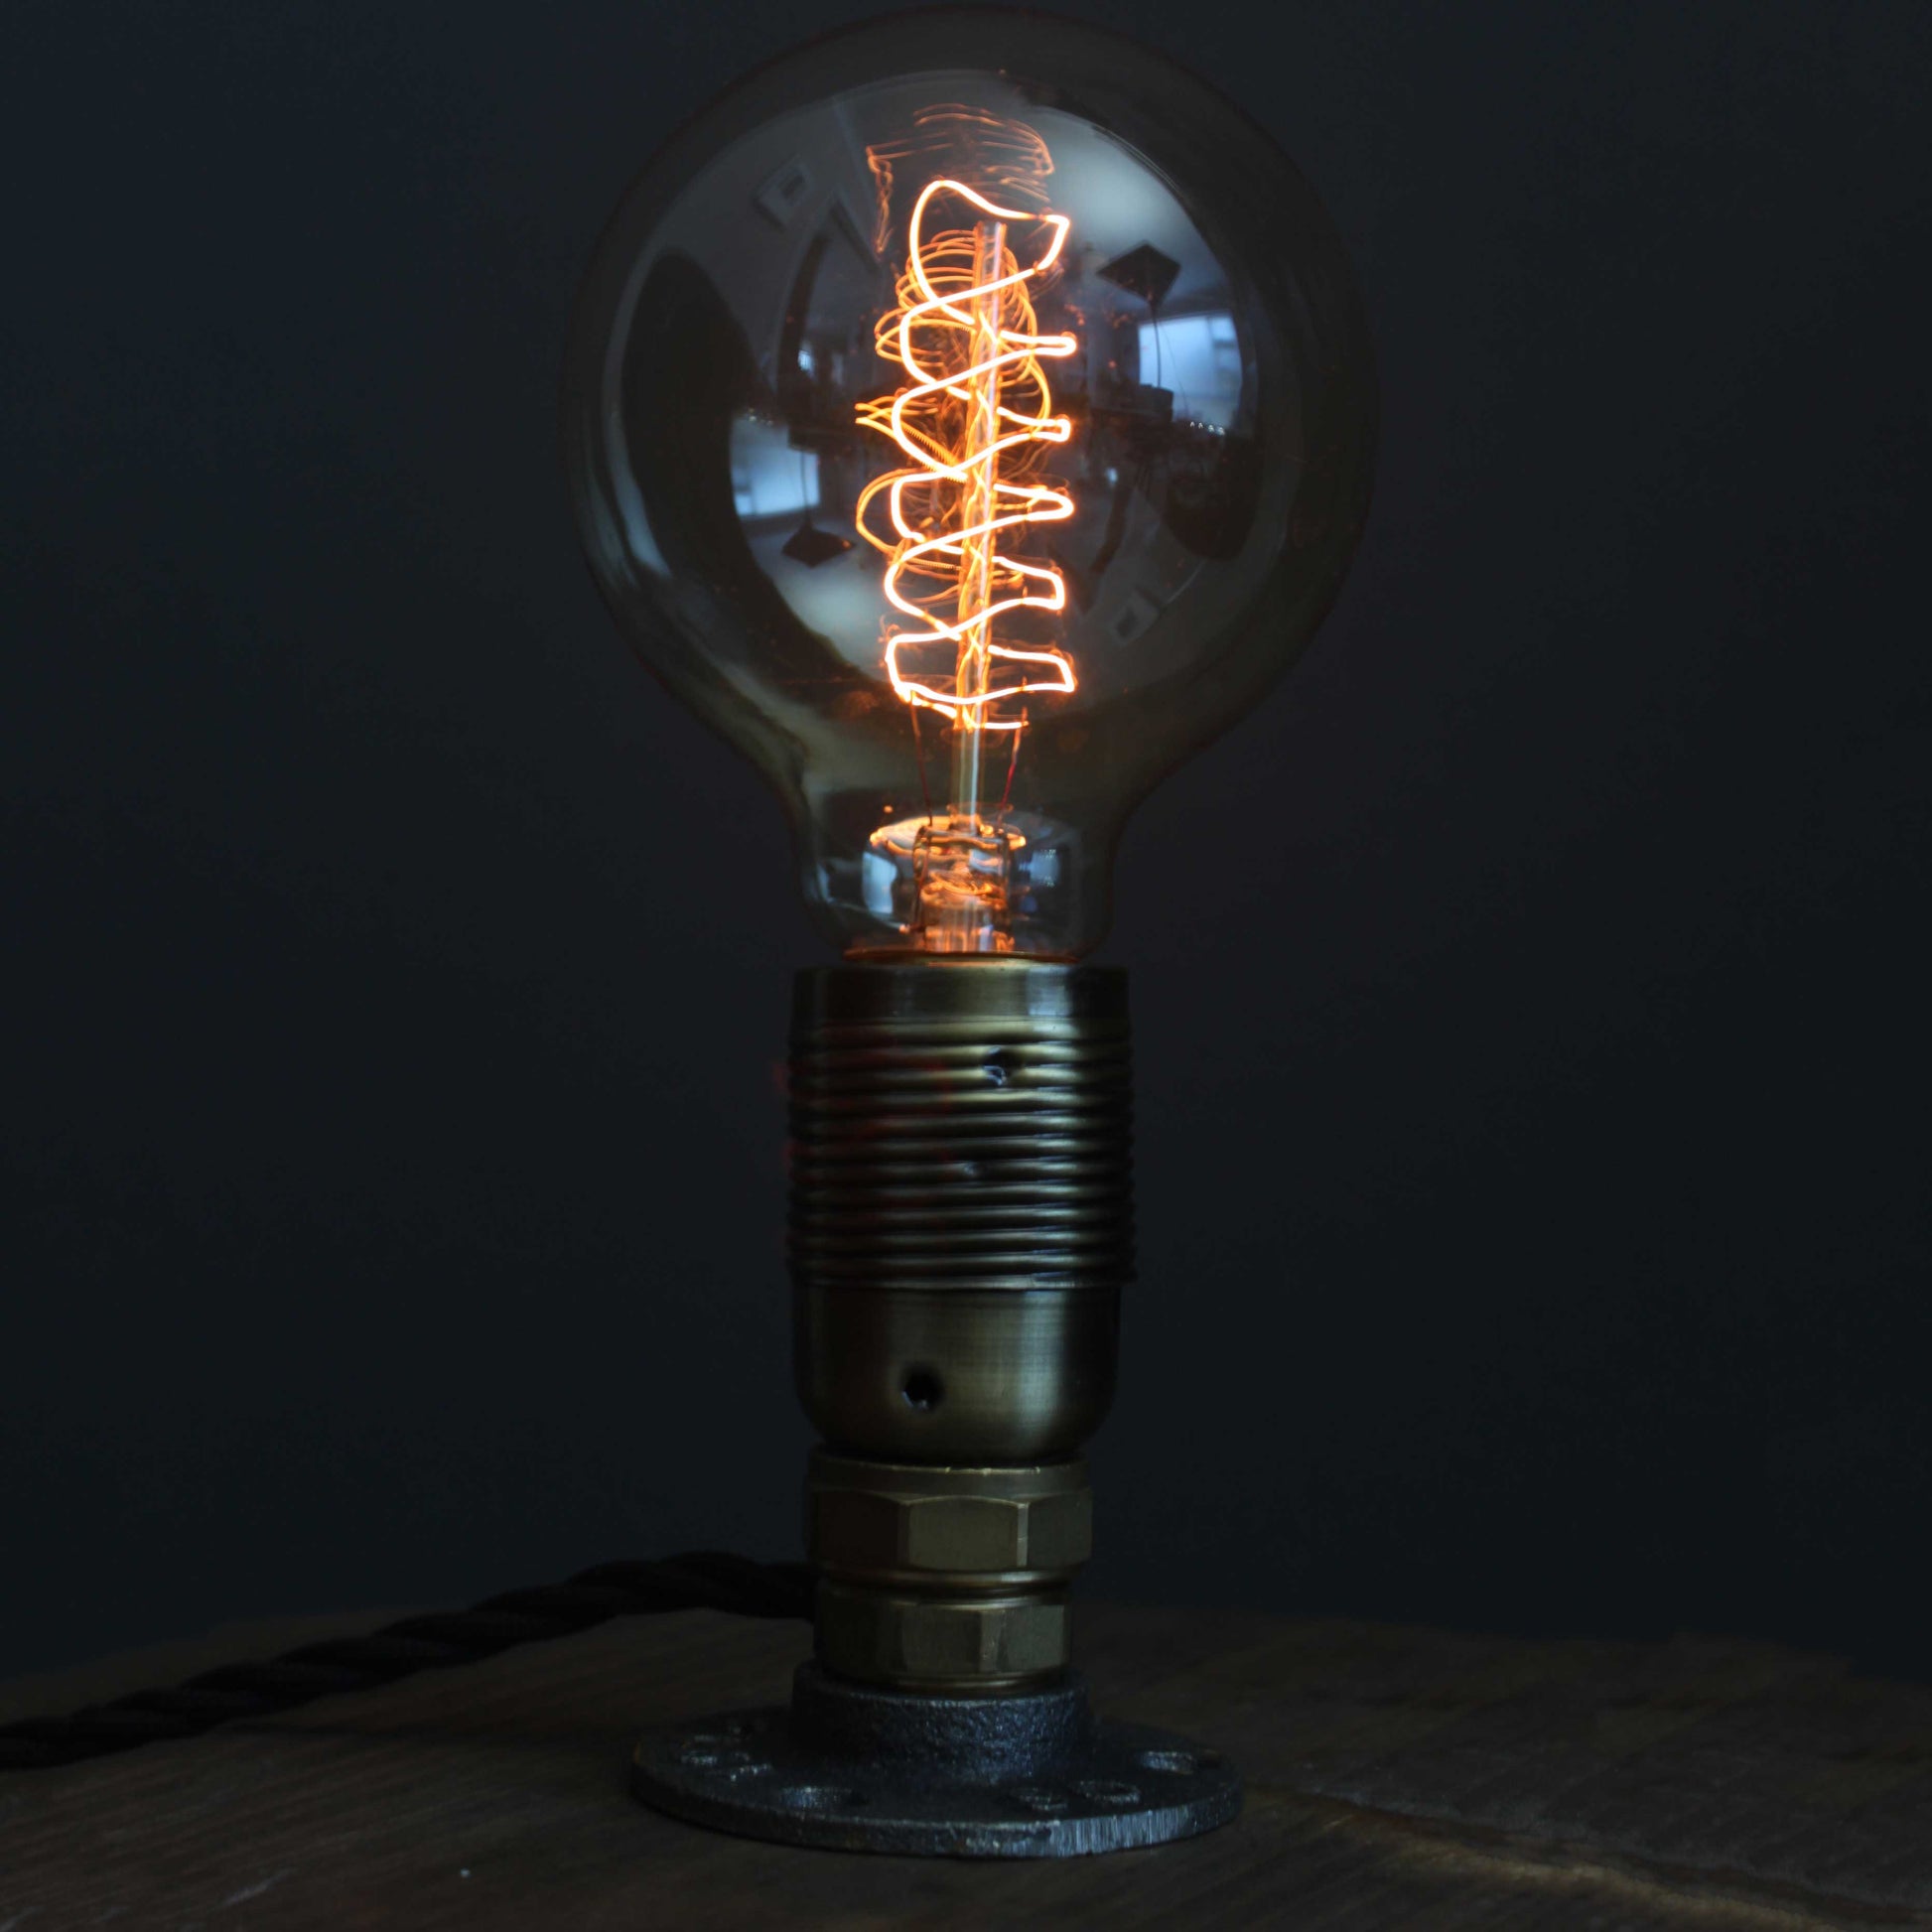 Flange-Lamp-with-spiral-incandescent-bulb-by-Emmet-Bosonnet-of-Kopper-Kreation-in-Dublin-Ireland